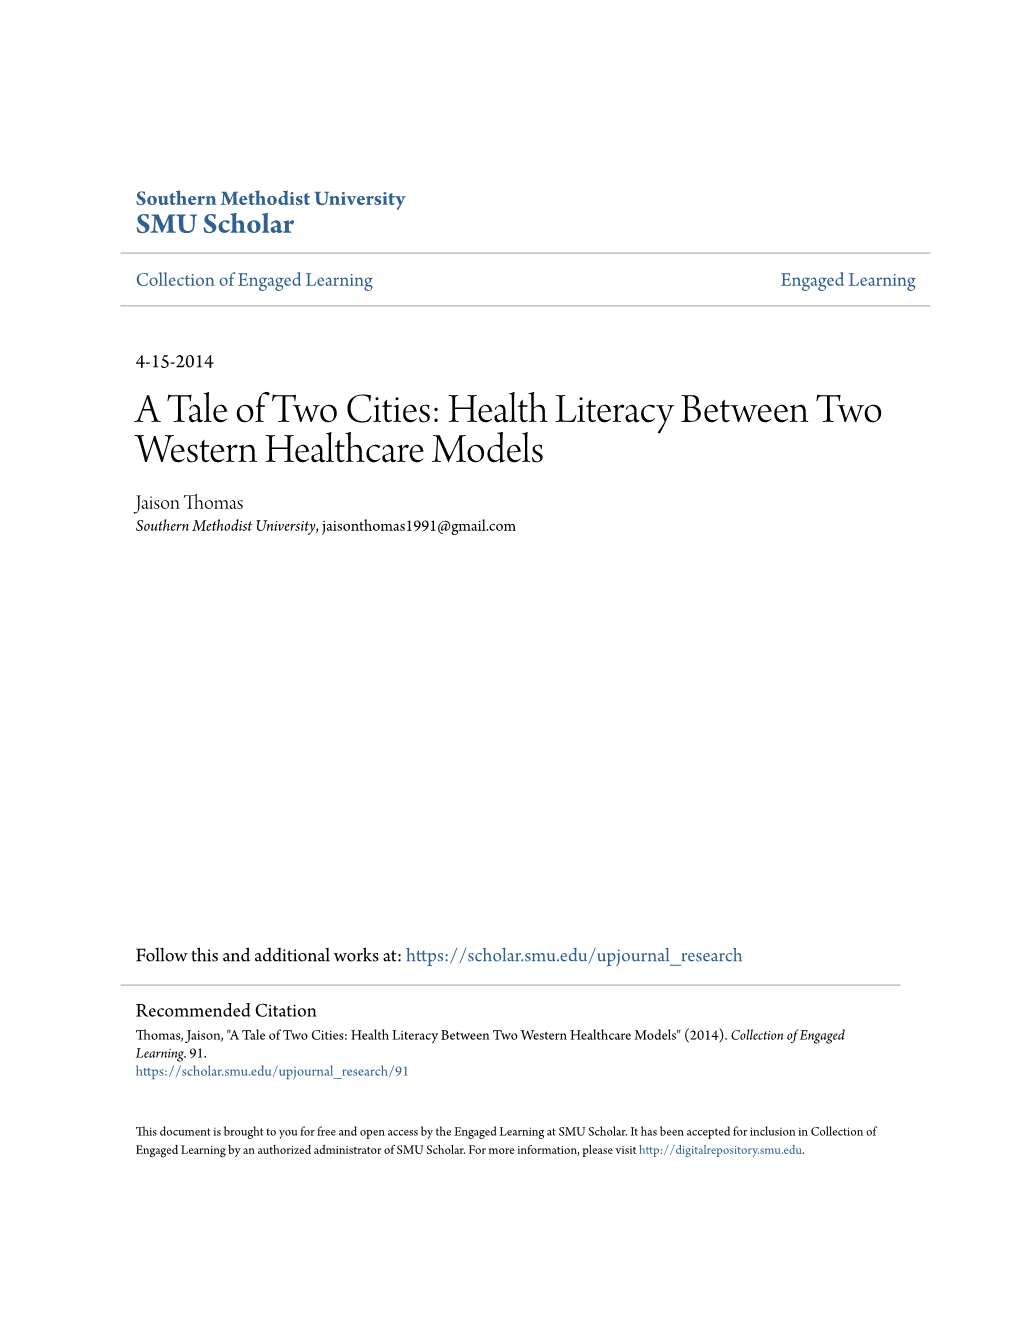 Health Literacy Between Two Western Healthcare Models Jaison Thomas Southern Methodist University, Jaisonthomas1991@Gmail.Com